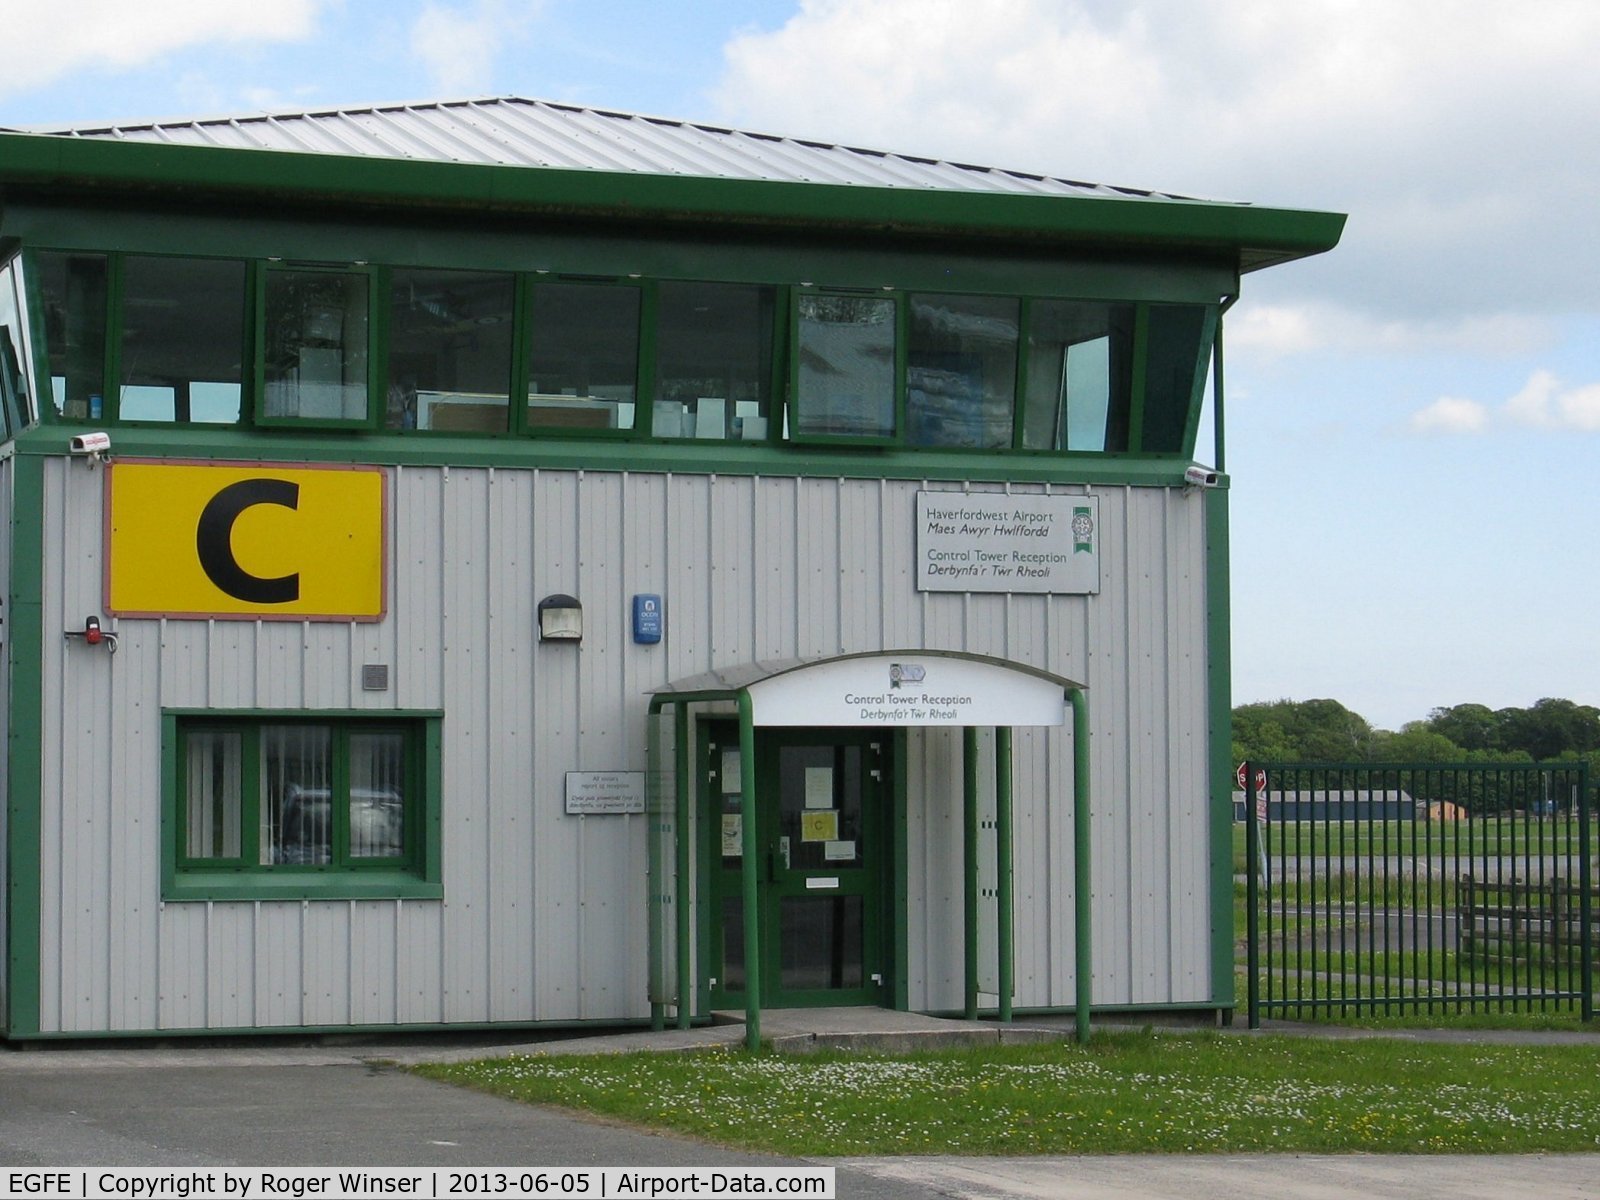 Haverfordwest Aerodrome Airport, Haverfordwest, Wales United Kingdom (EGFE) - Control Tower and Reception at Haverfordwest Airport.